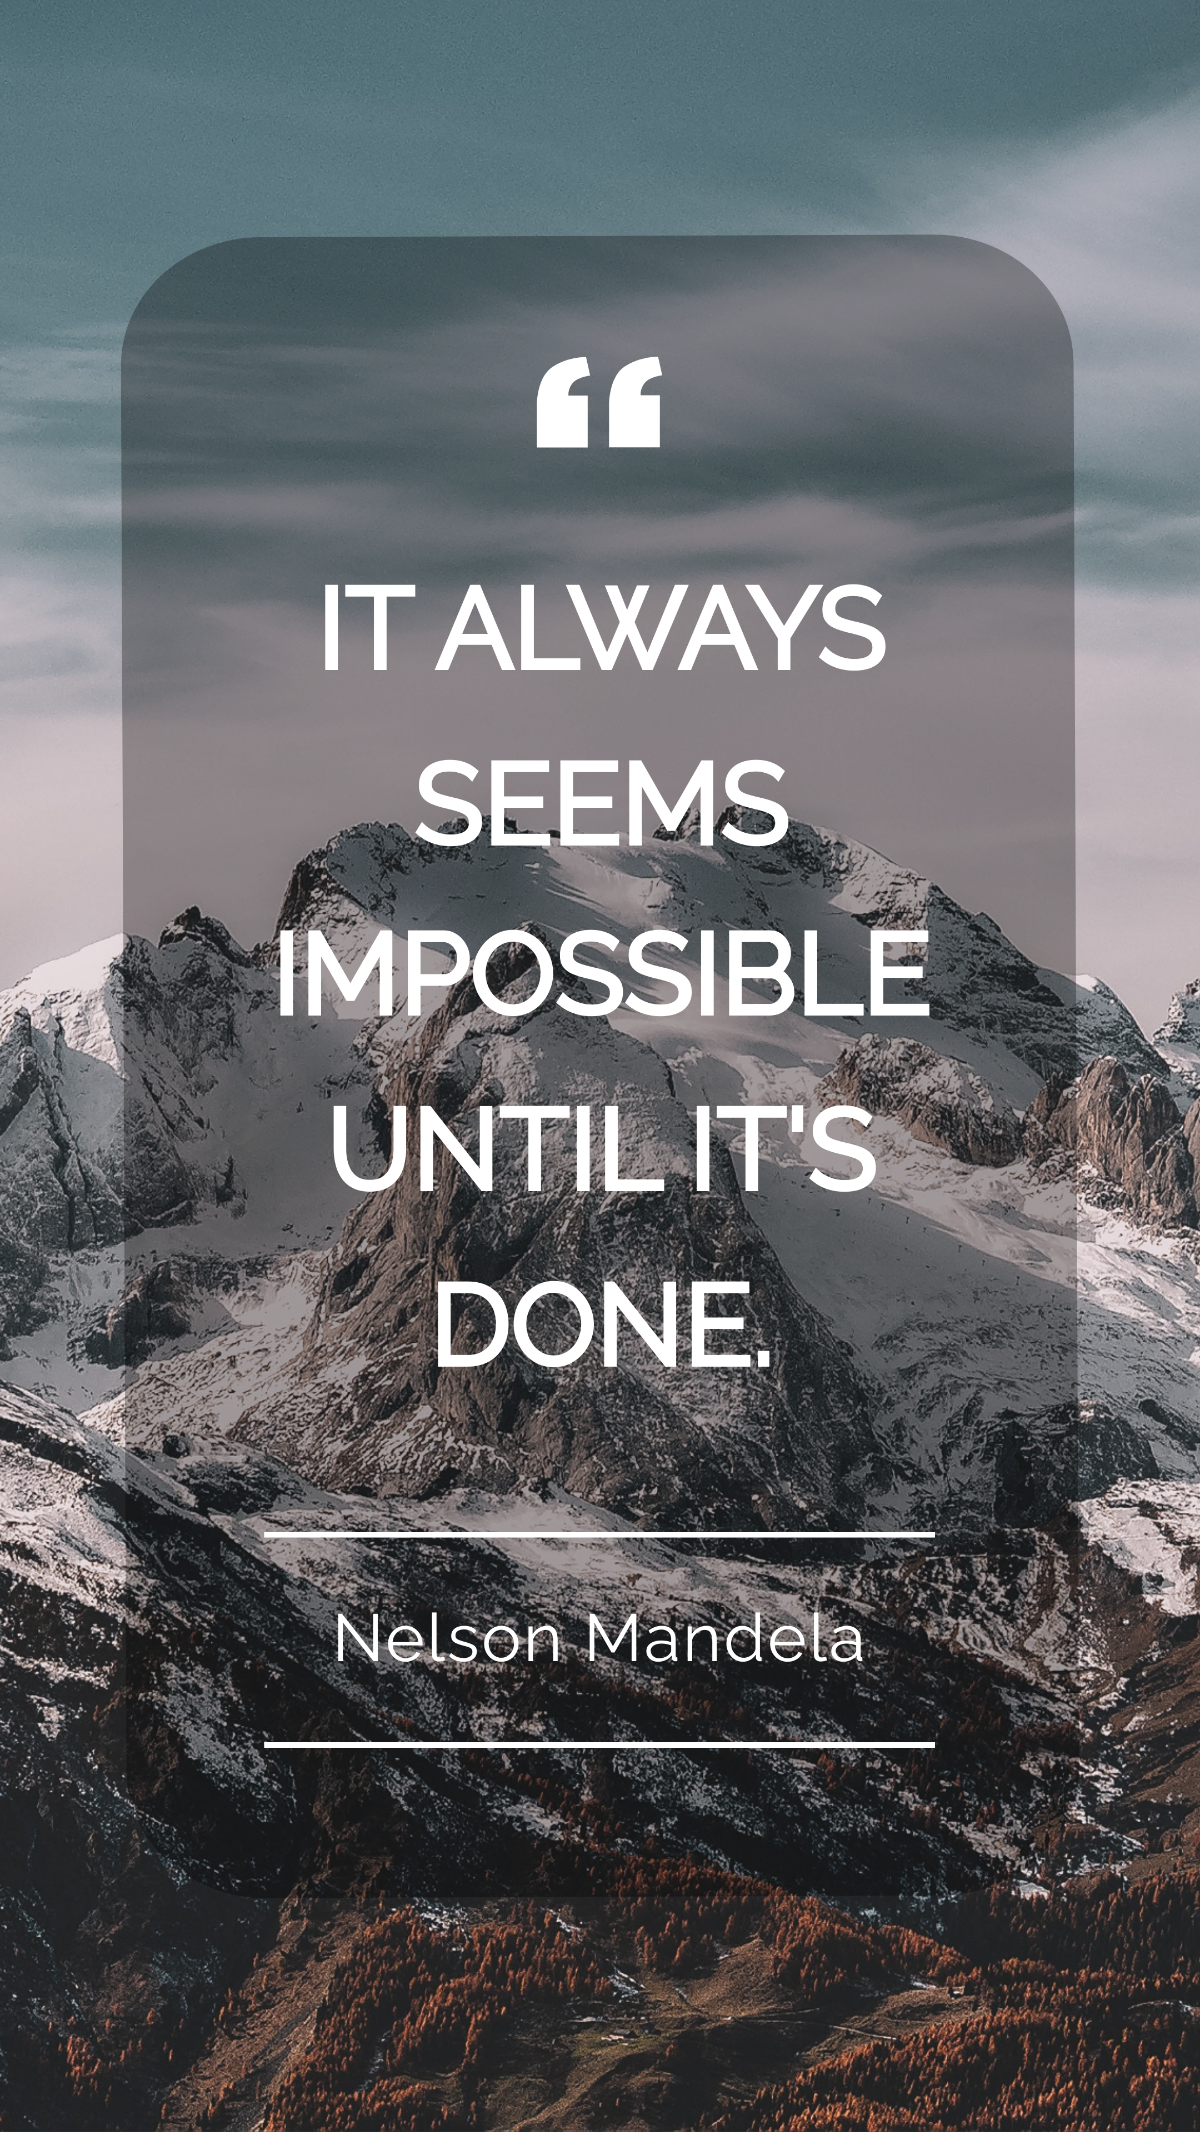 Nelson Mandela - “It always seems impossible until it’s done.”